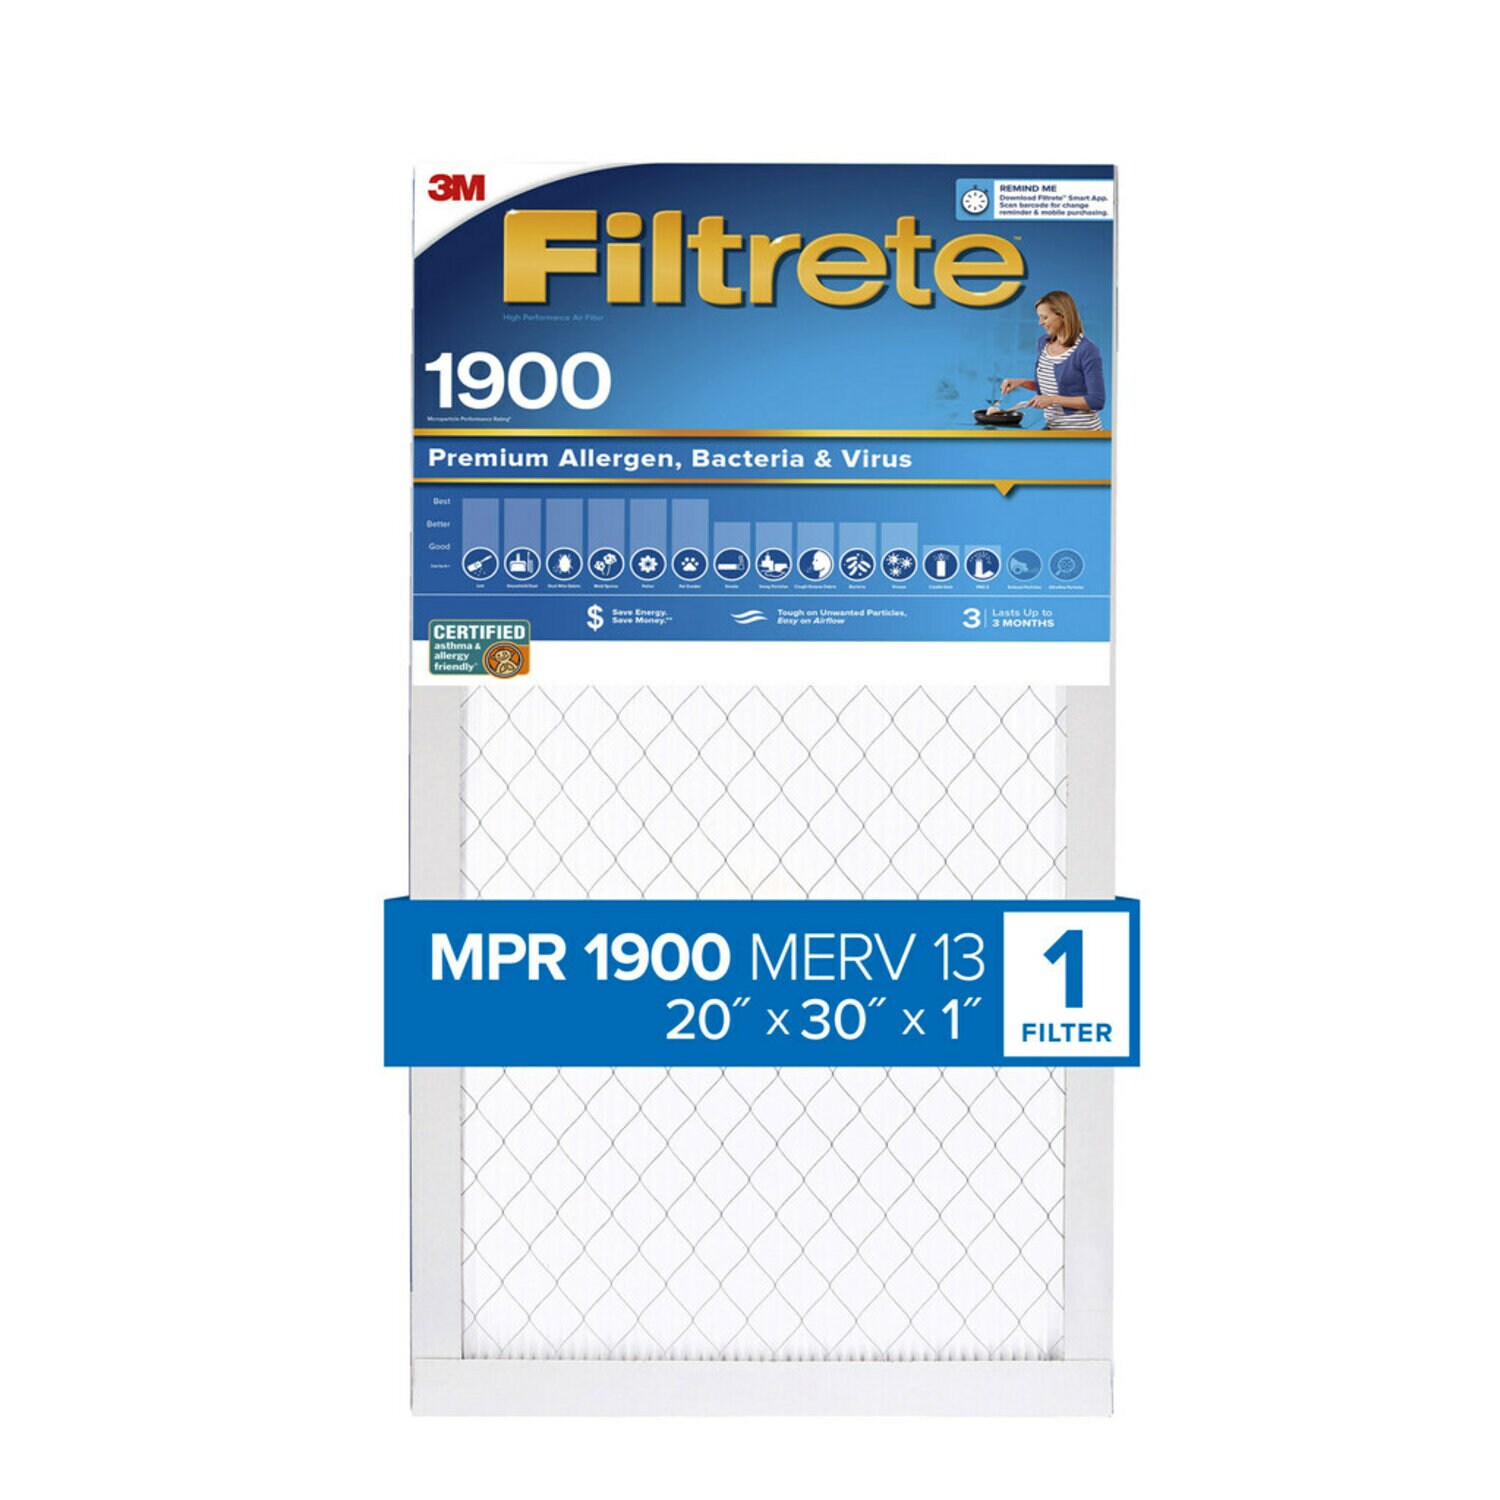 7100220112 - Filtrete High Performance Air Filter 1900 MPR UT22-4, 20 in x 30 in x 1 in (50.8 cm x 76.2 cm x 2.5 cm)